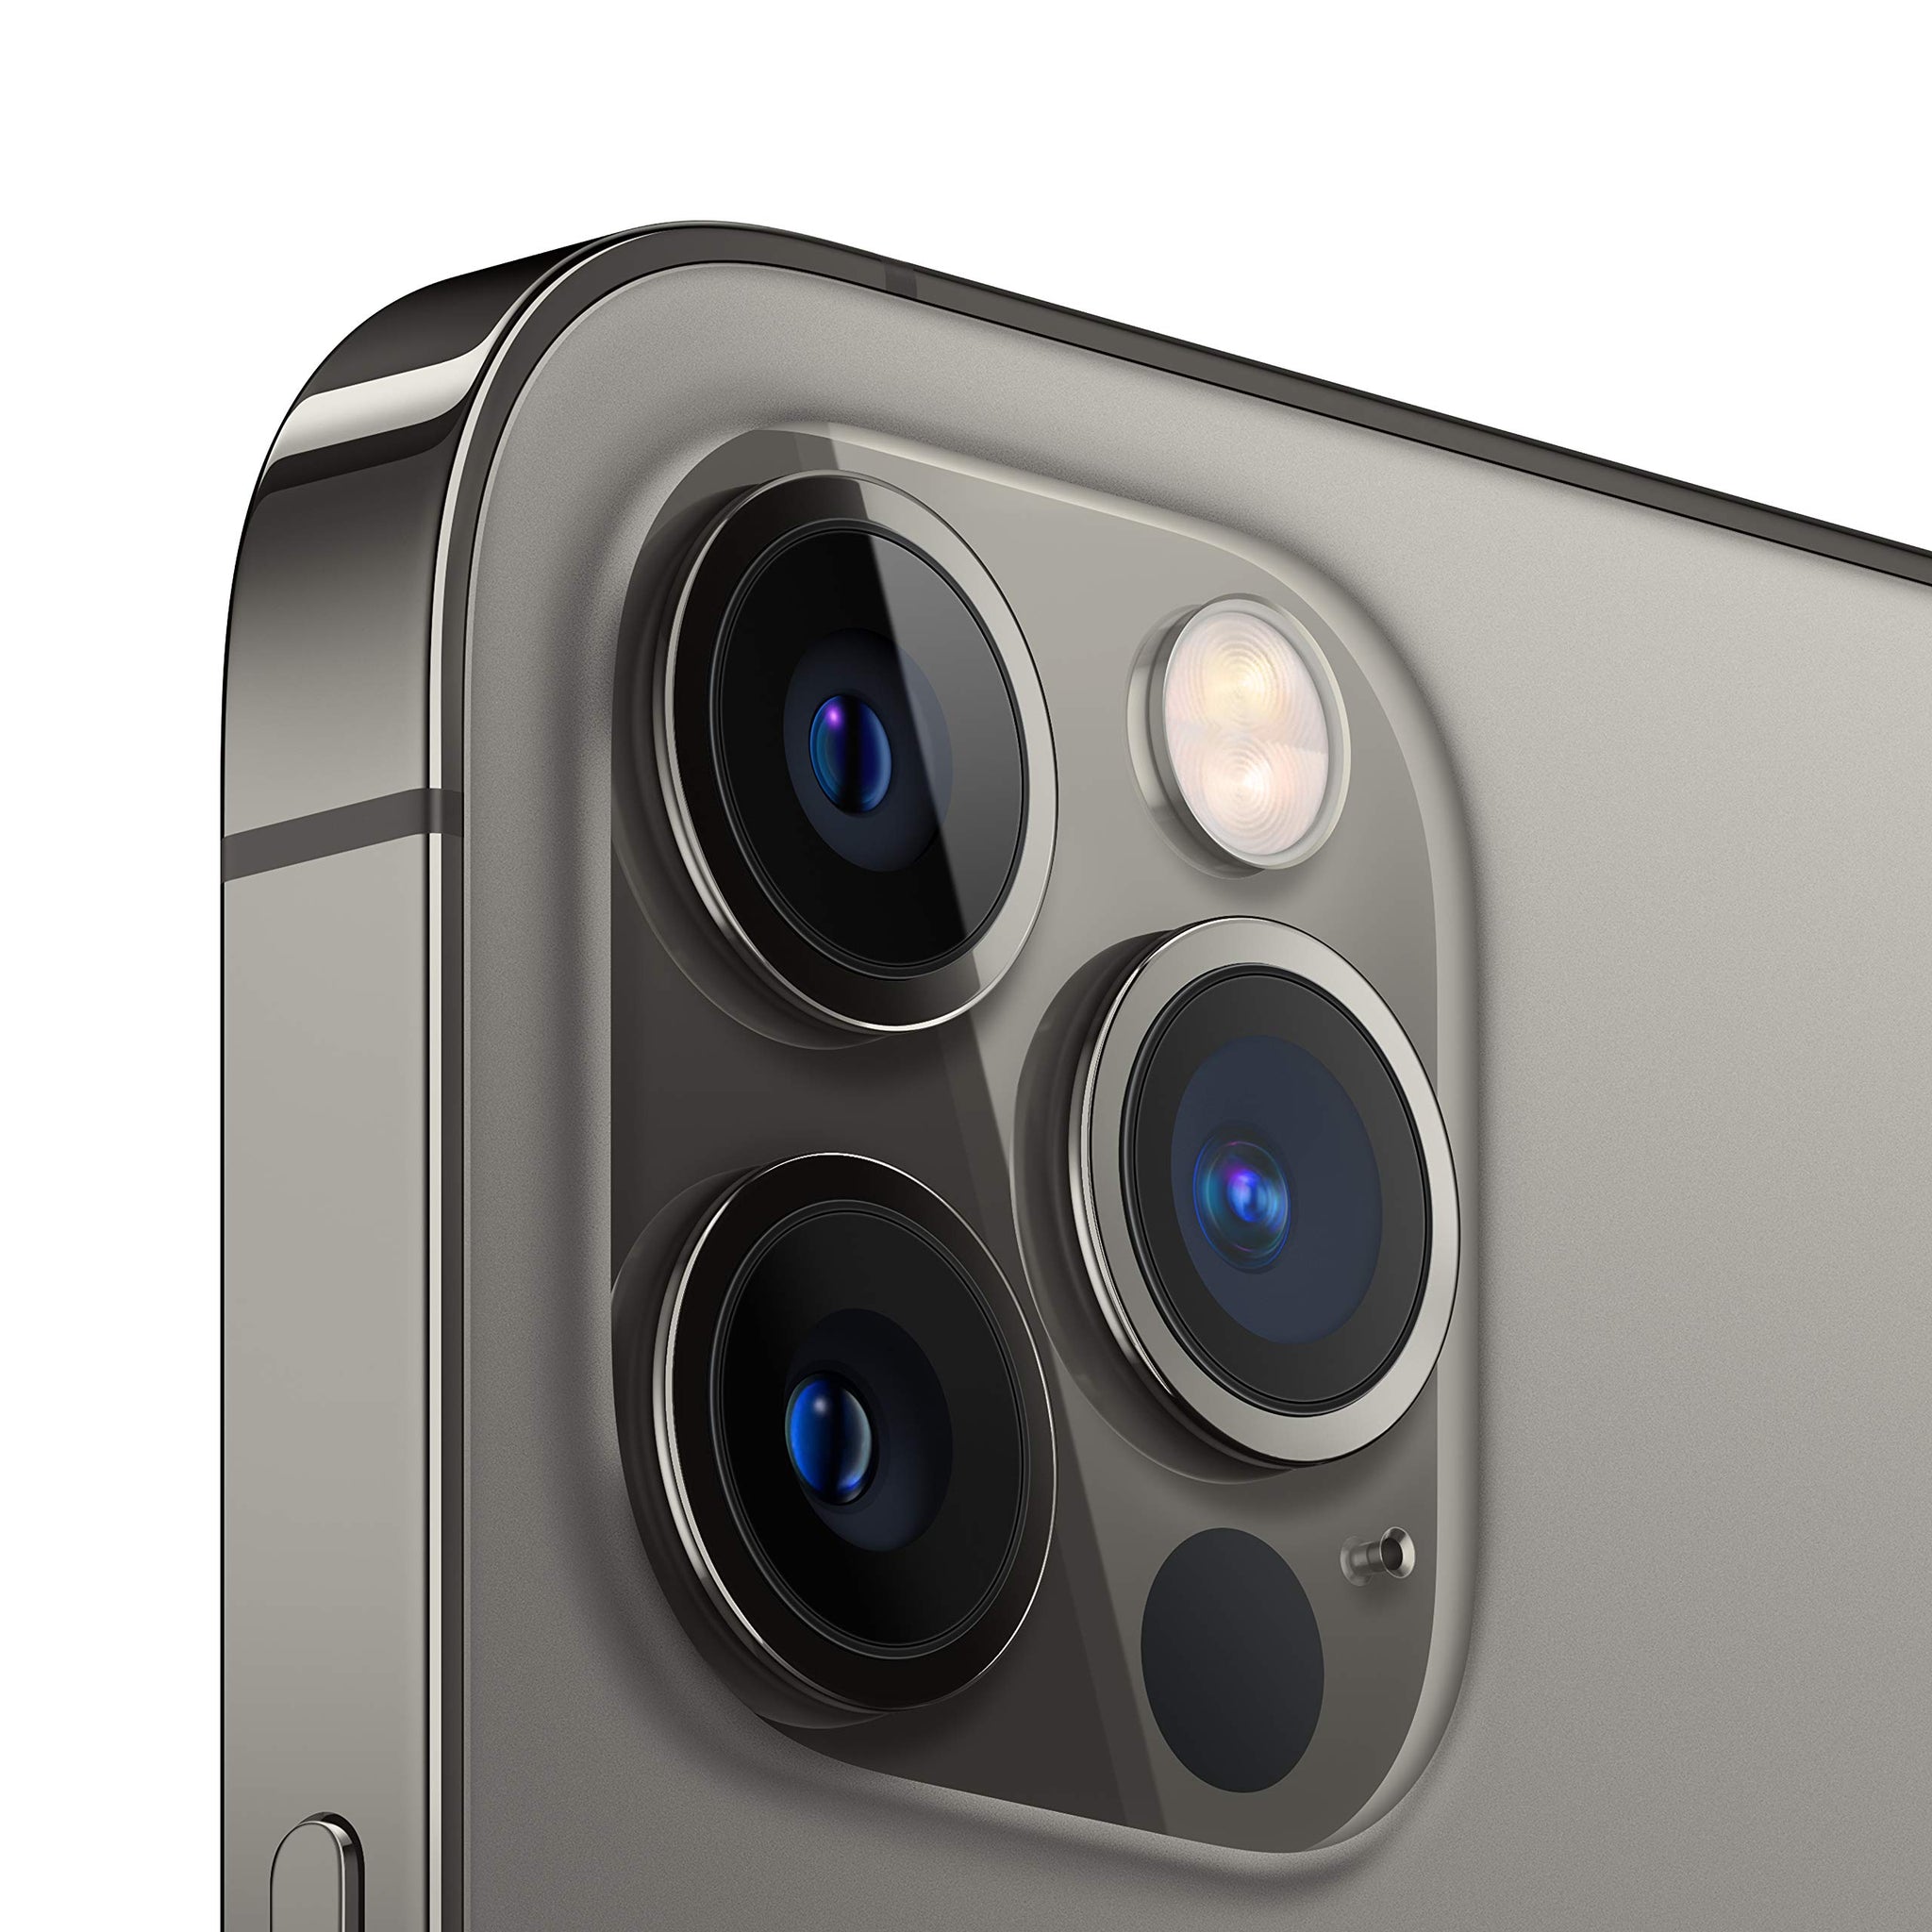 Apple iPhone 12 Pro Max 512GB - Factory Unlocked